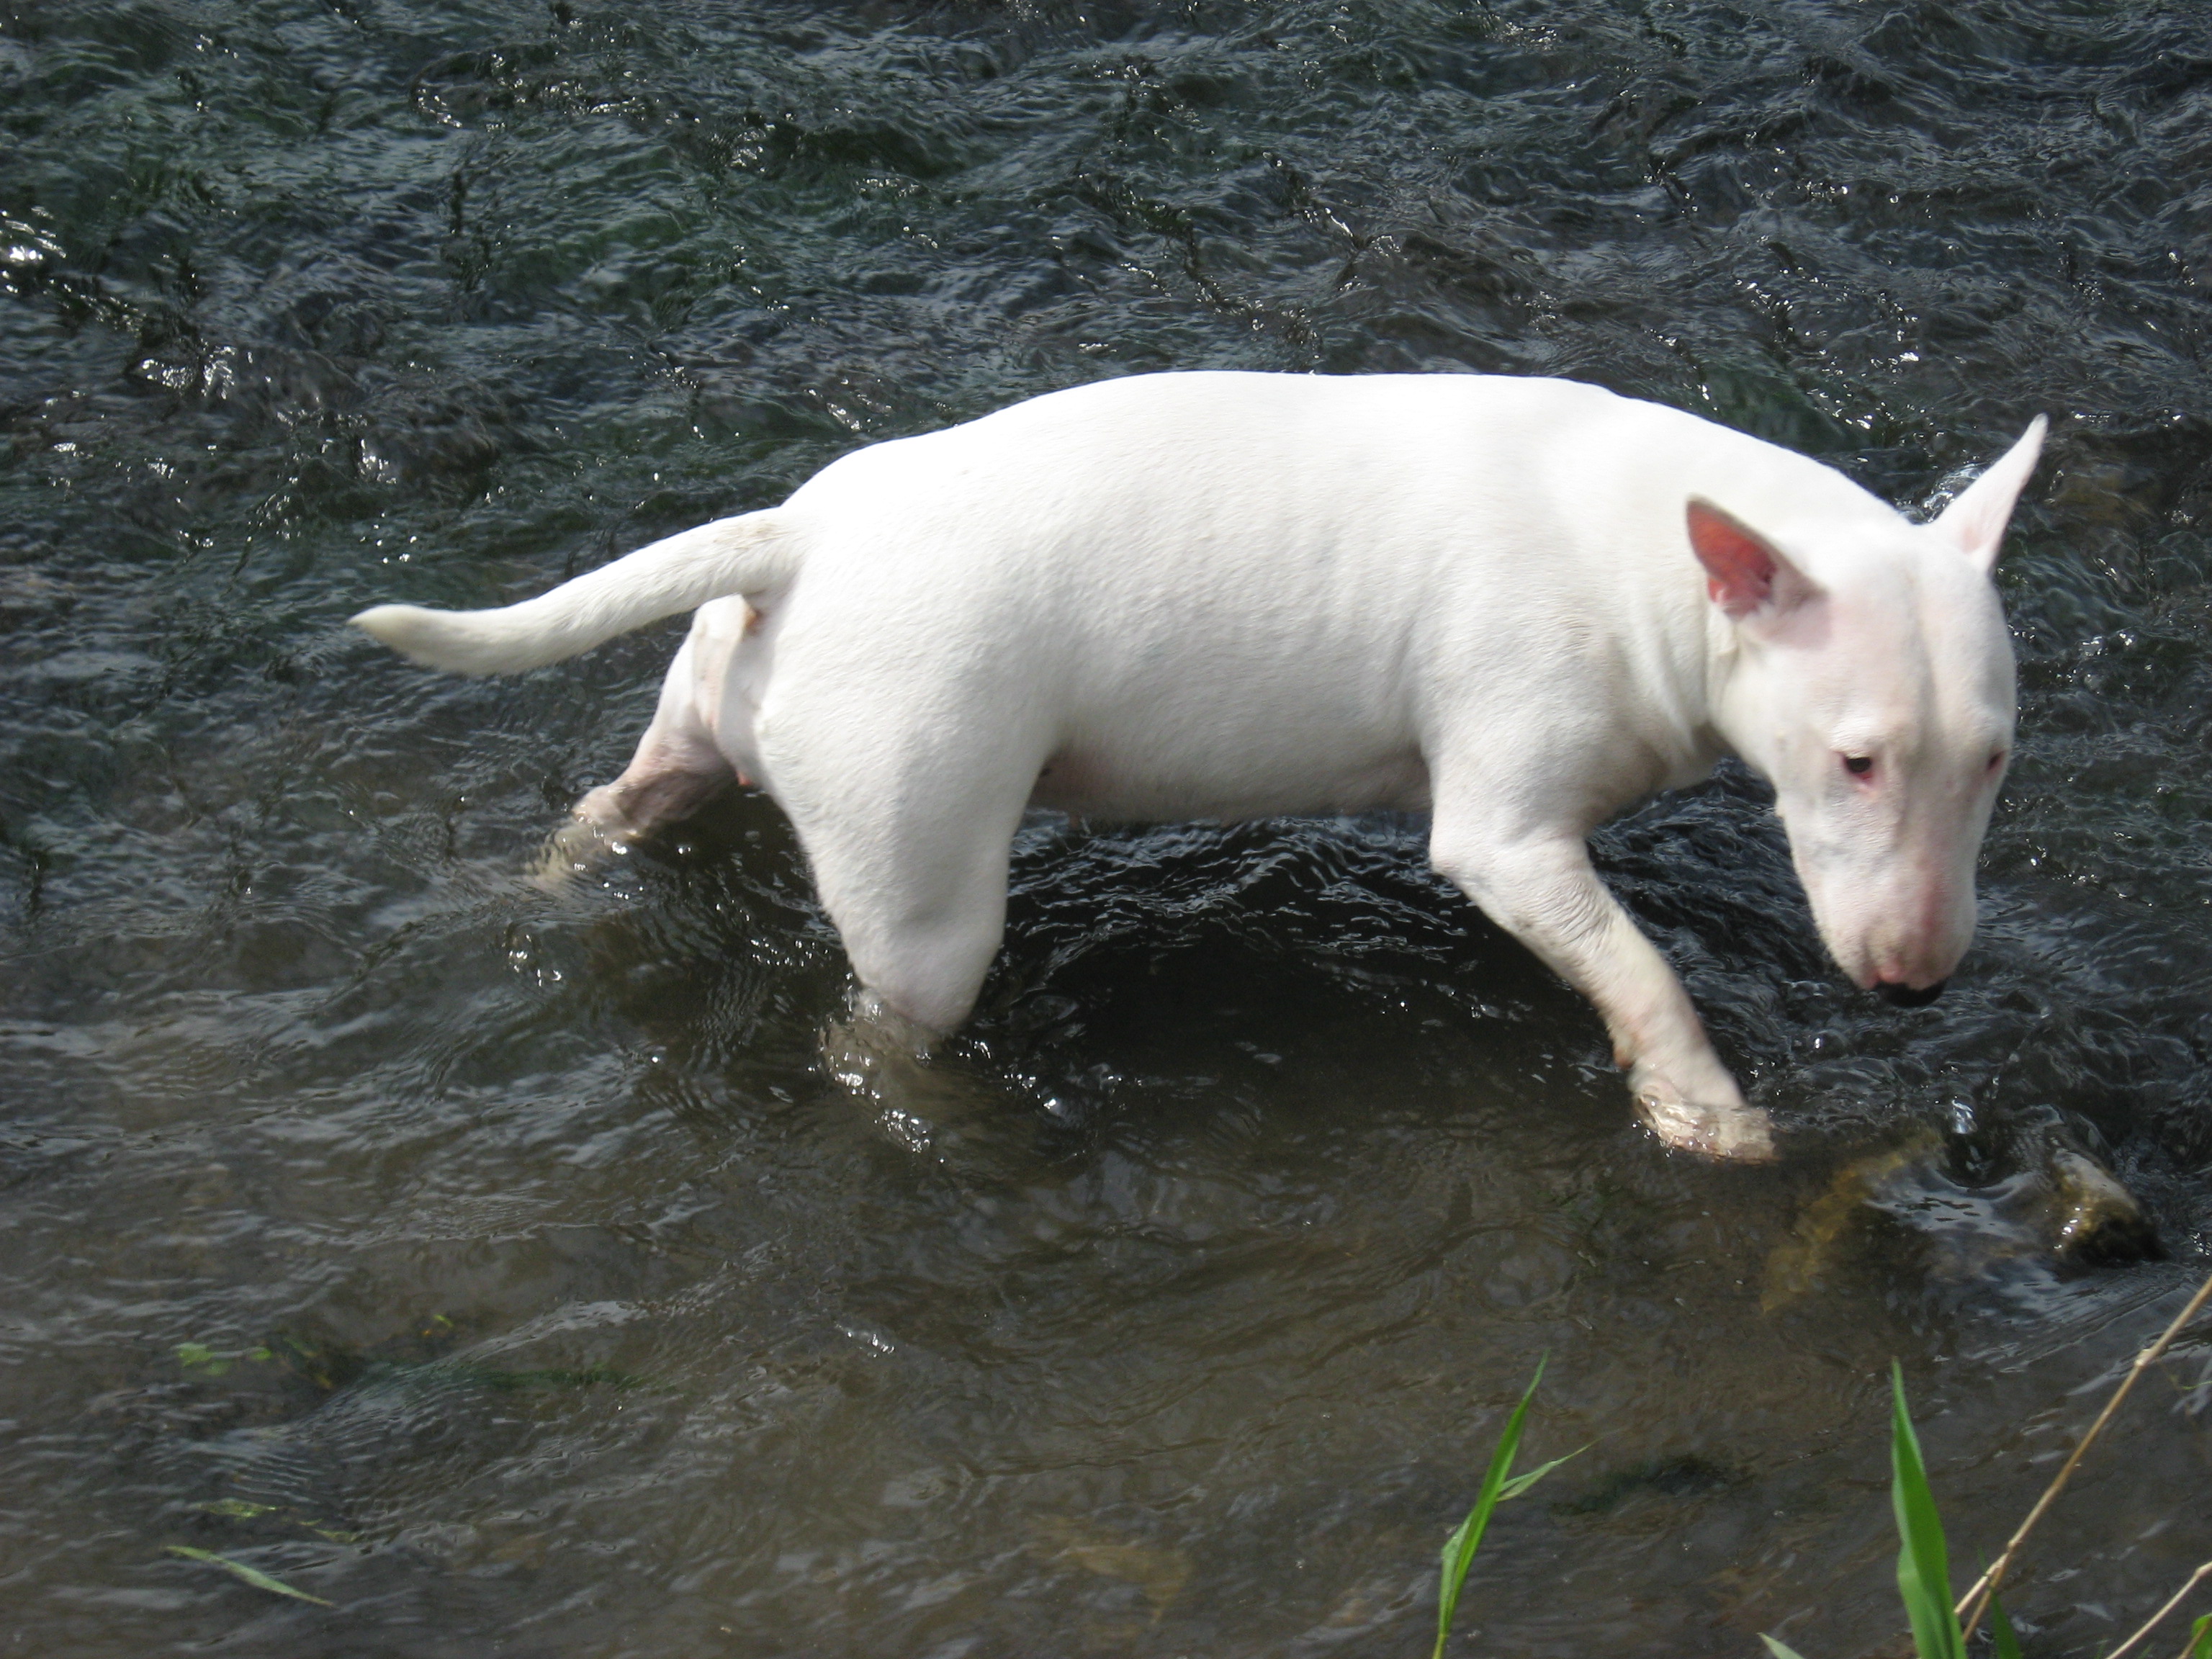 Miniatur Bullterrier durchquert das Wasser